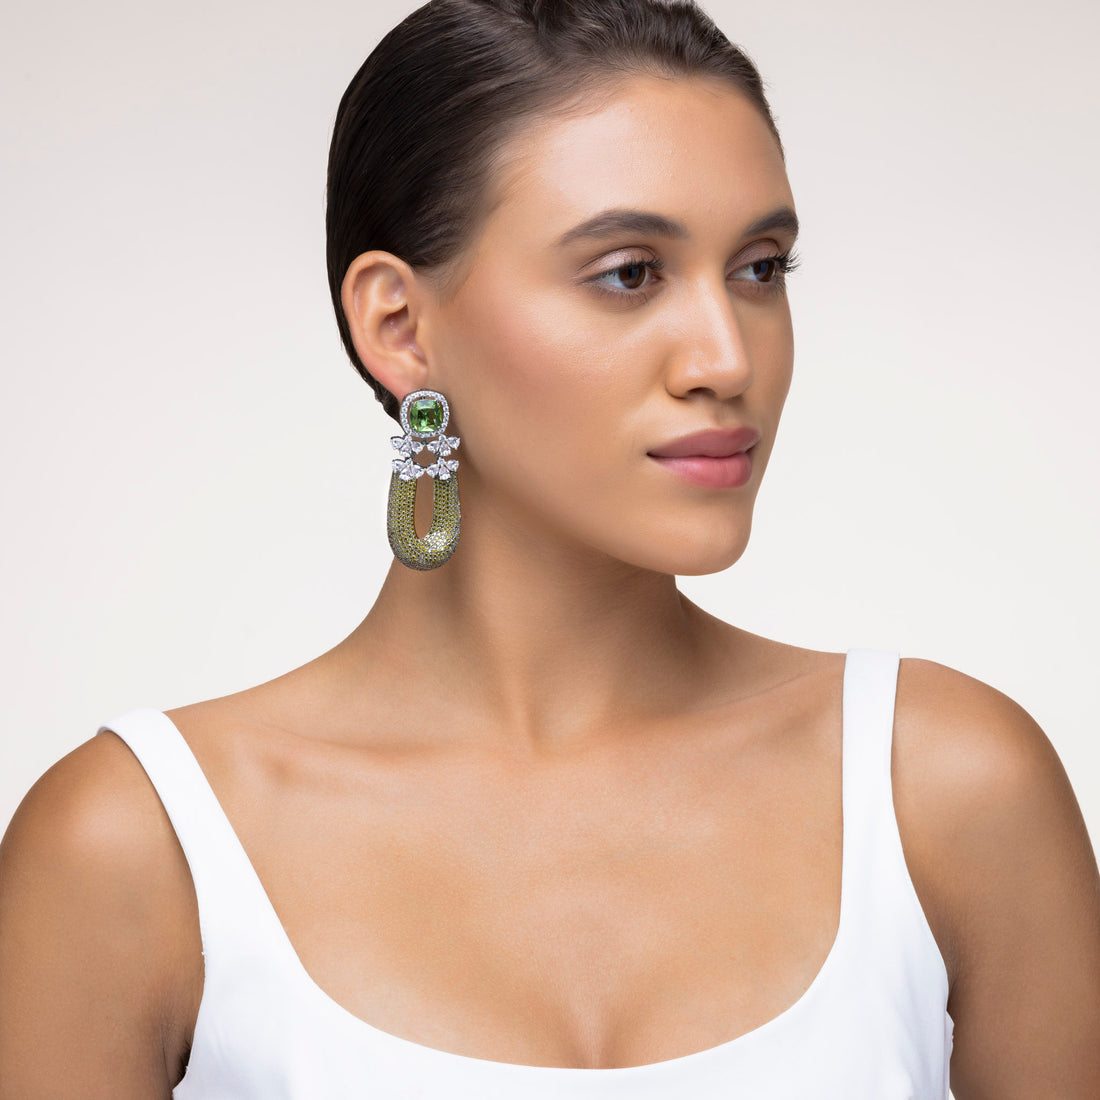 Arched Elegance: PRAO's U-Shaped Dangle Earrings